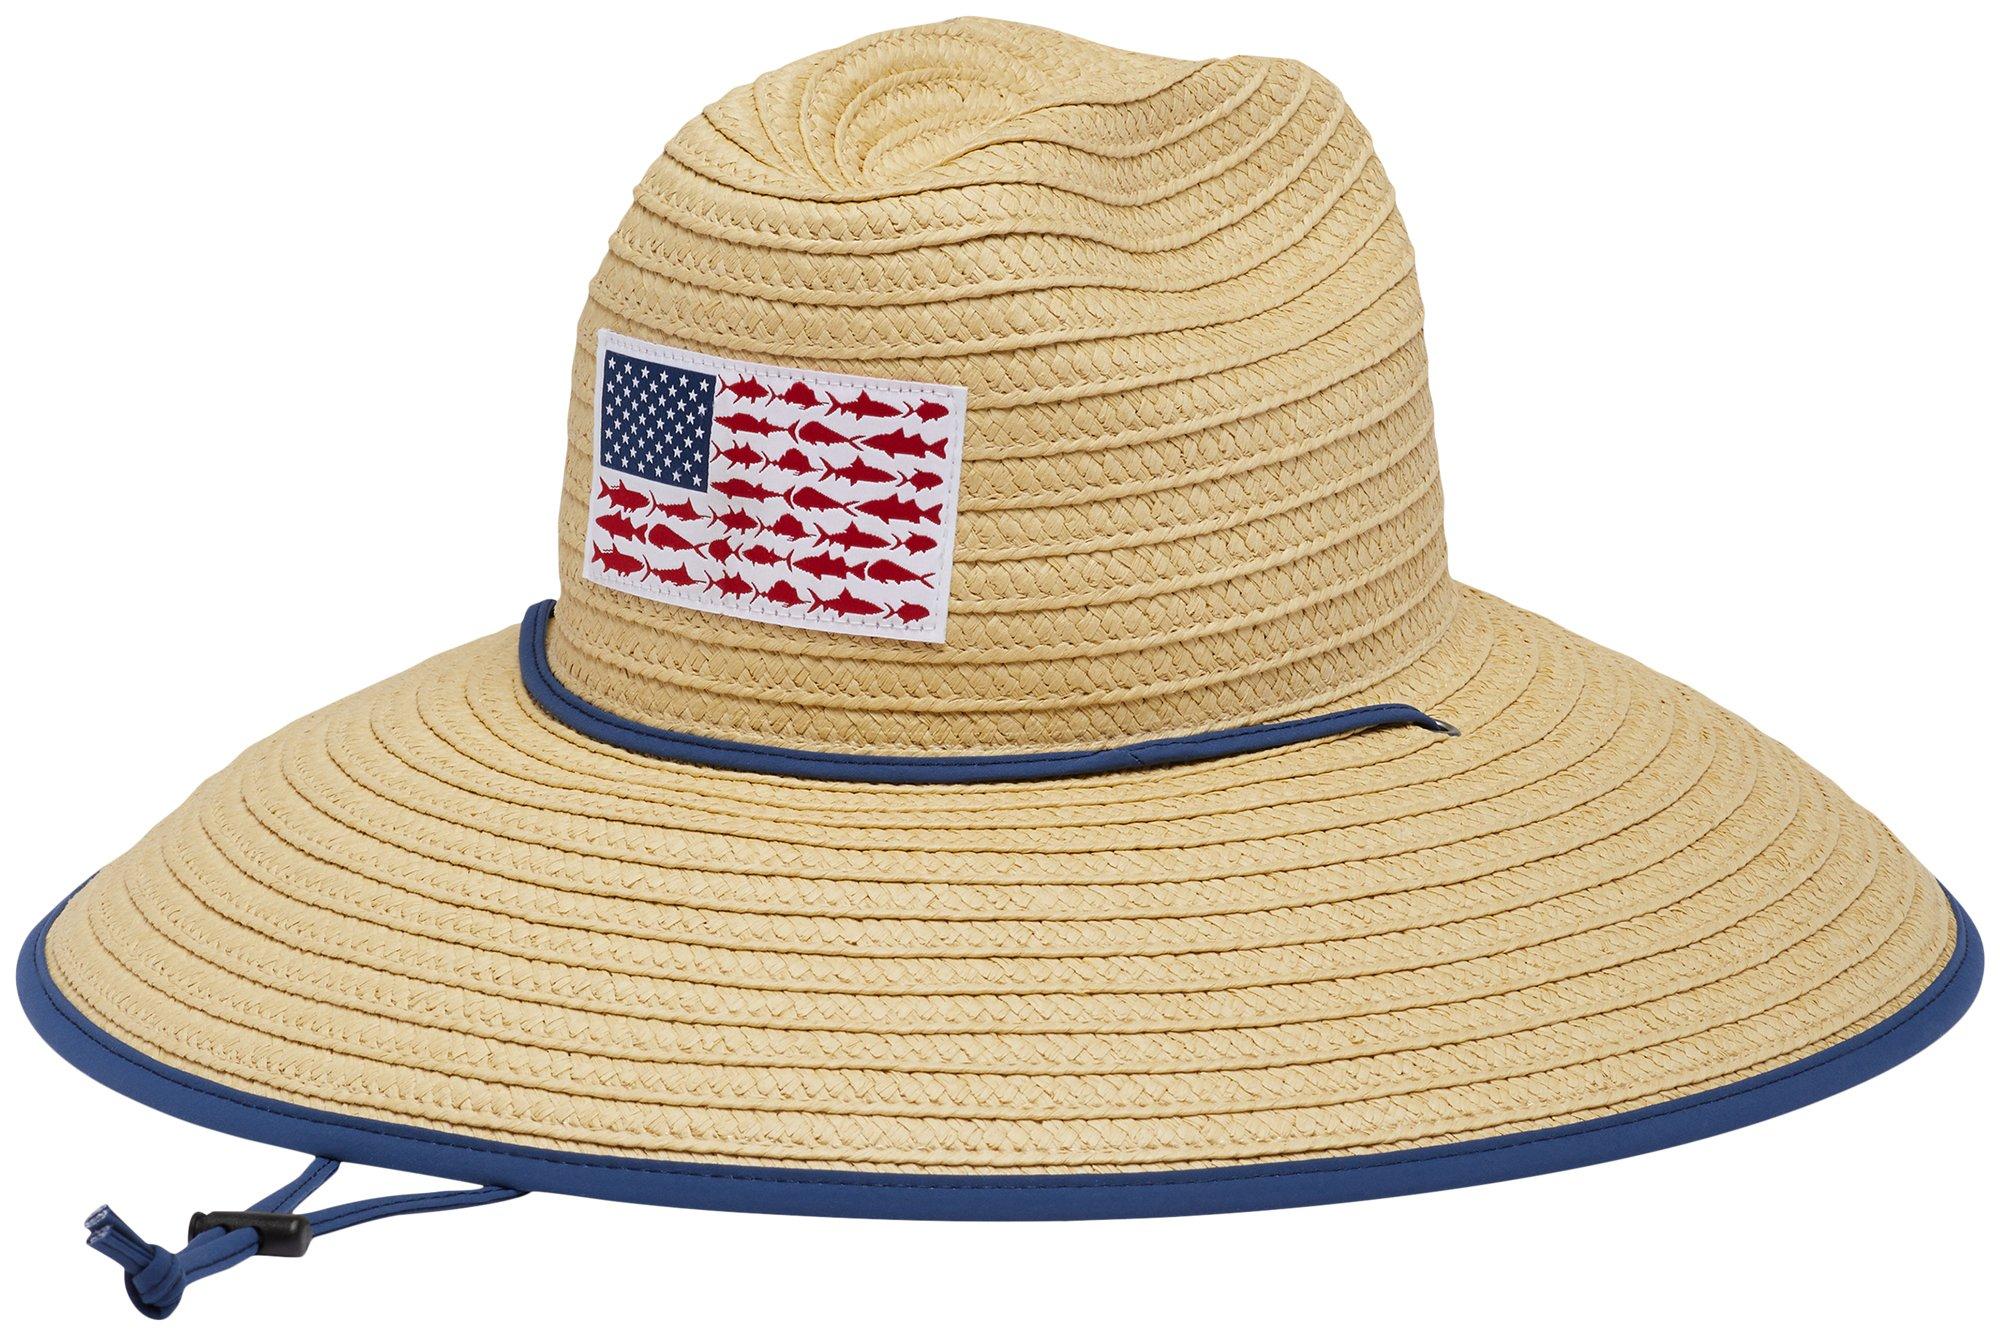 Americana Applique Straw Lifeguard Hat